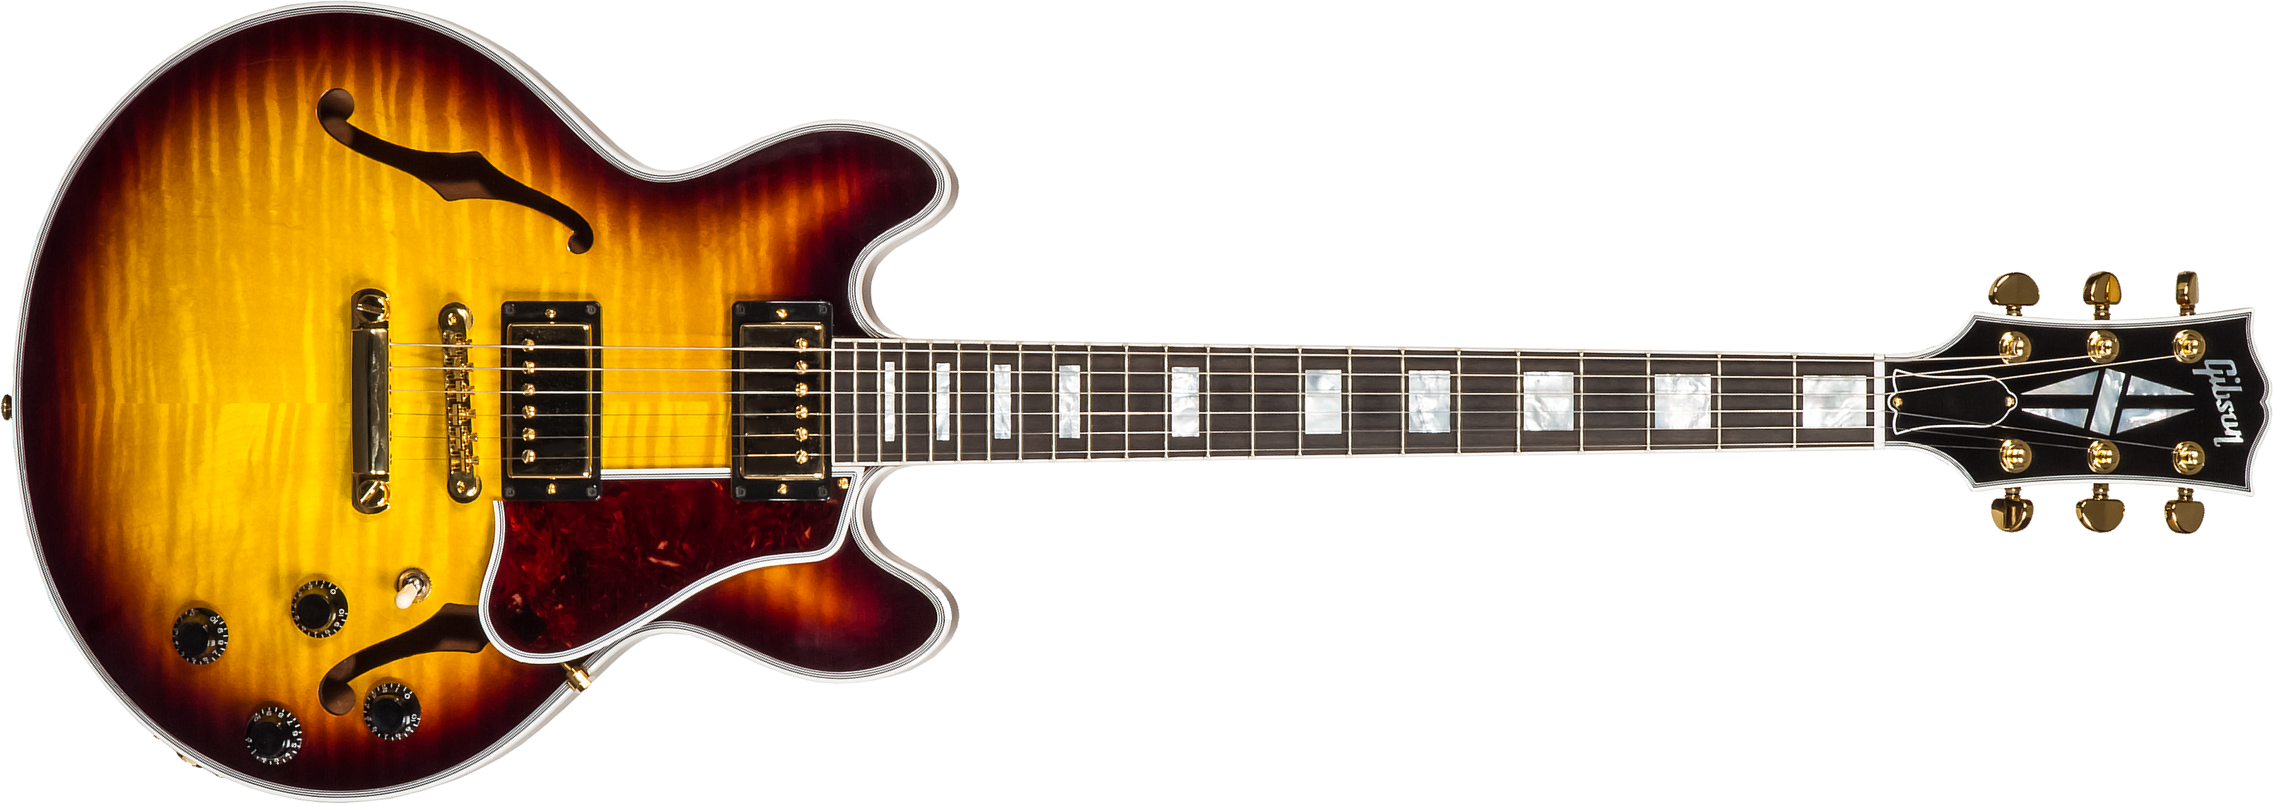 Gibson Custom Shop Cs-356 2h Ht Eb #cs201786 - Vintage Sunburst - Semi hollow elektriche gitaar - Main picture